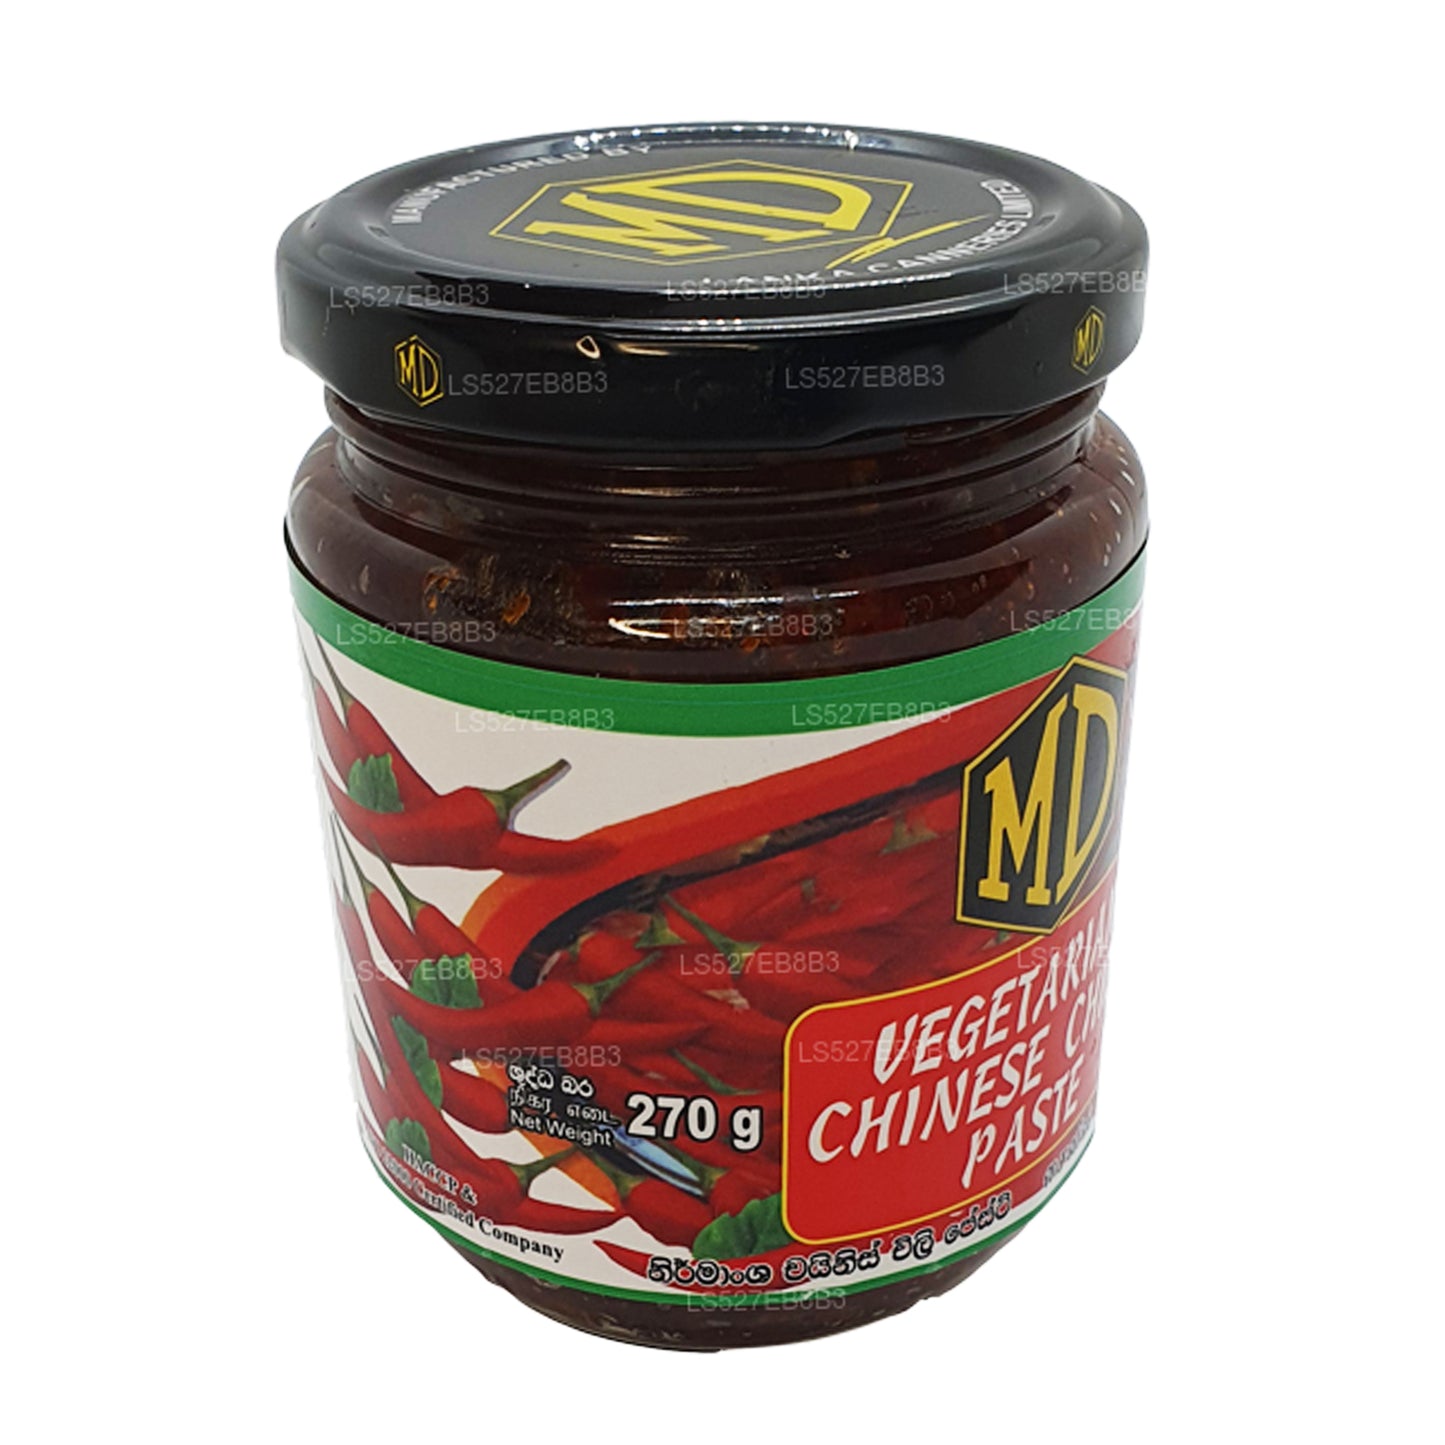 MD 素食中国辣椒酱 (270g)